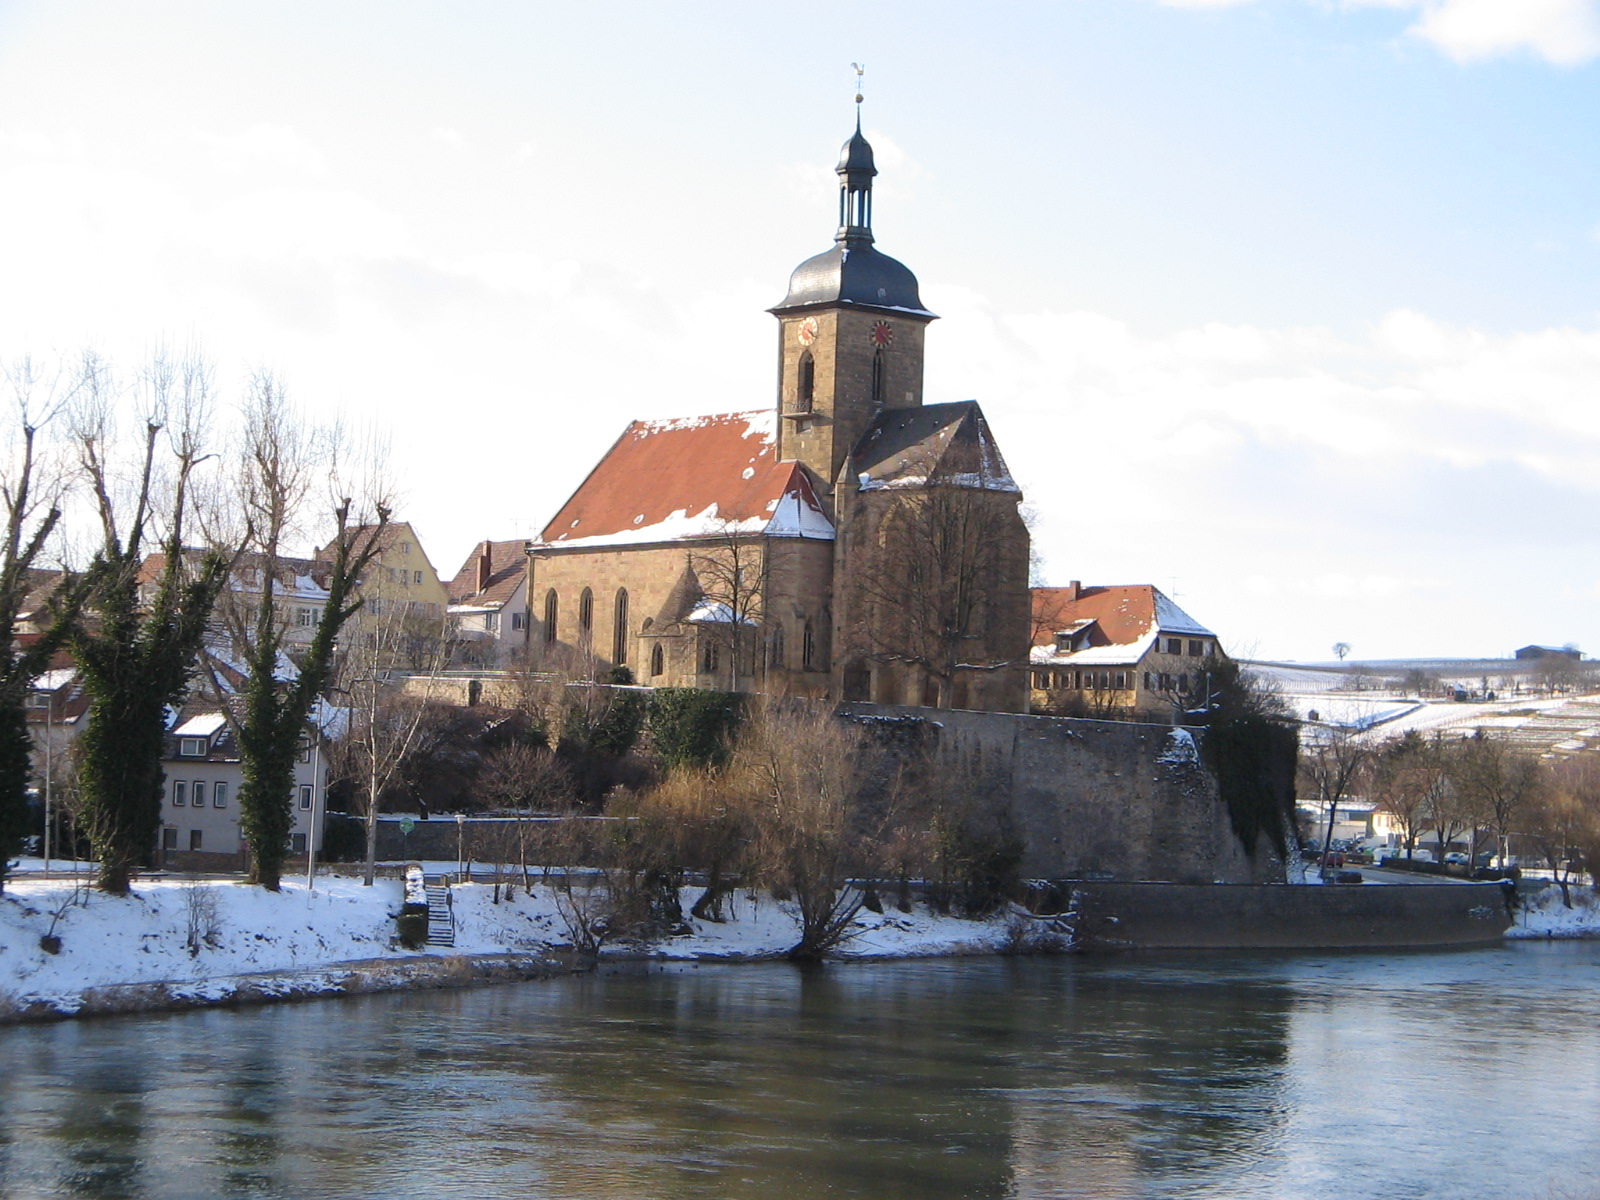 27.02.2005 - Regiswindiskirche im Winter - Lauffen am Neckar